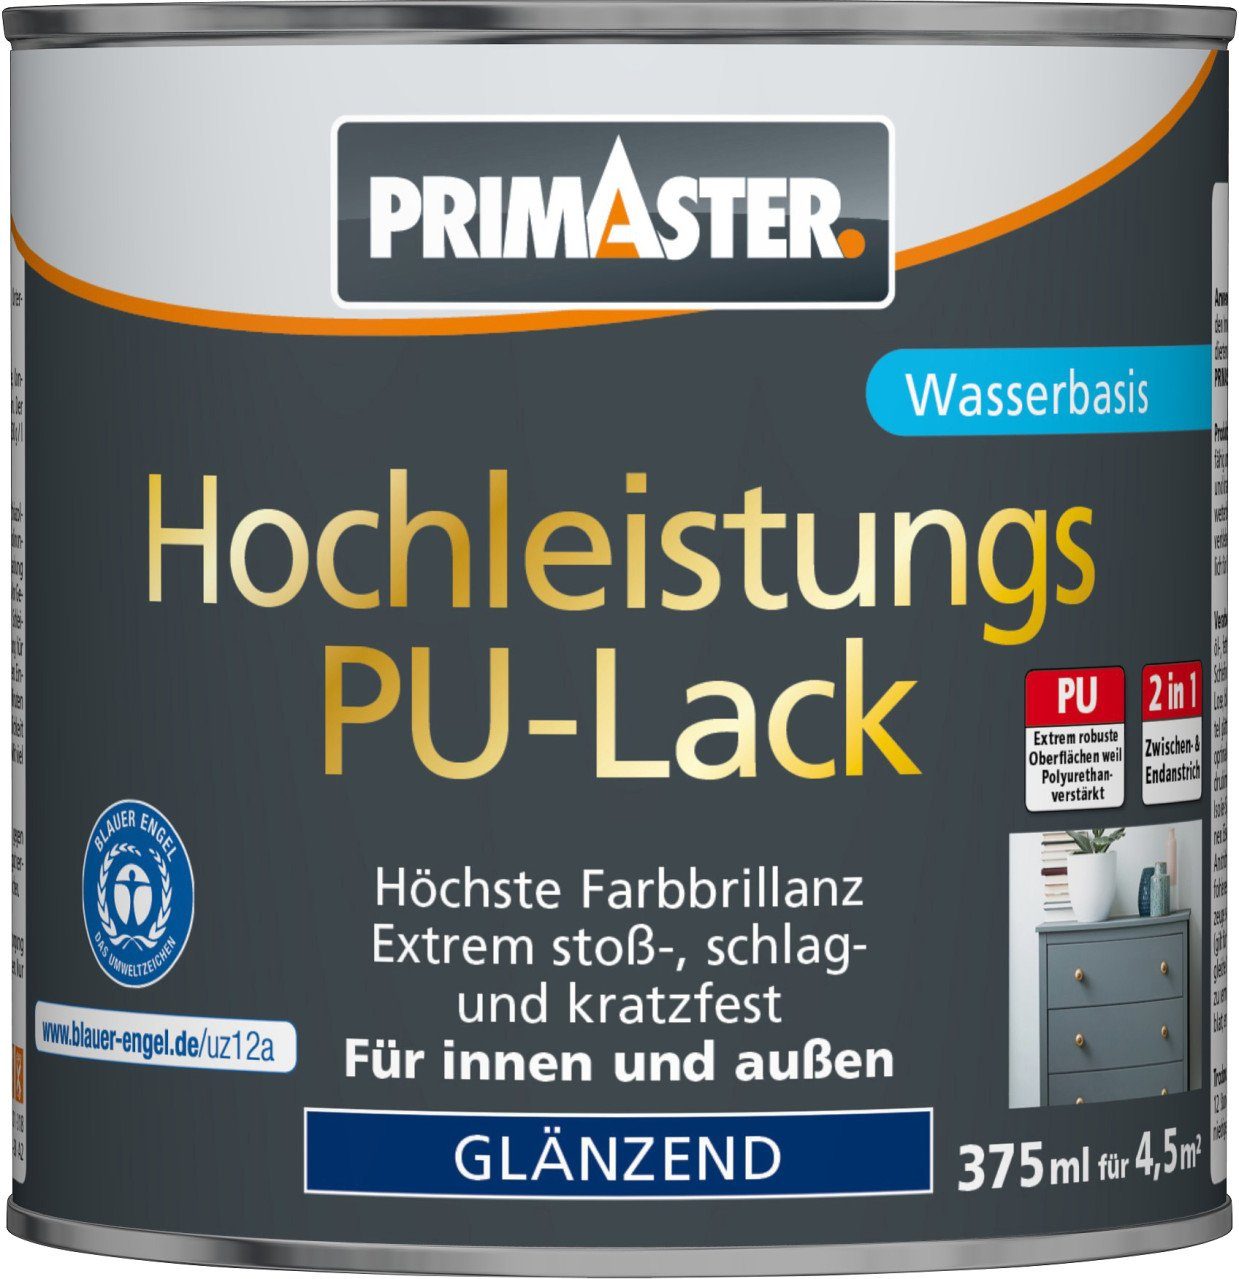 Primaster ml 3000 PU-Lack Acryl-Buntlack RAL 375 Primaster feuerrot